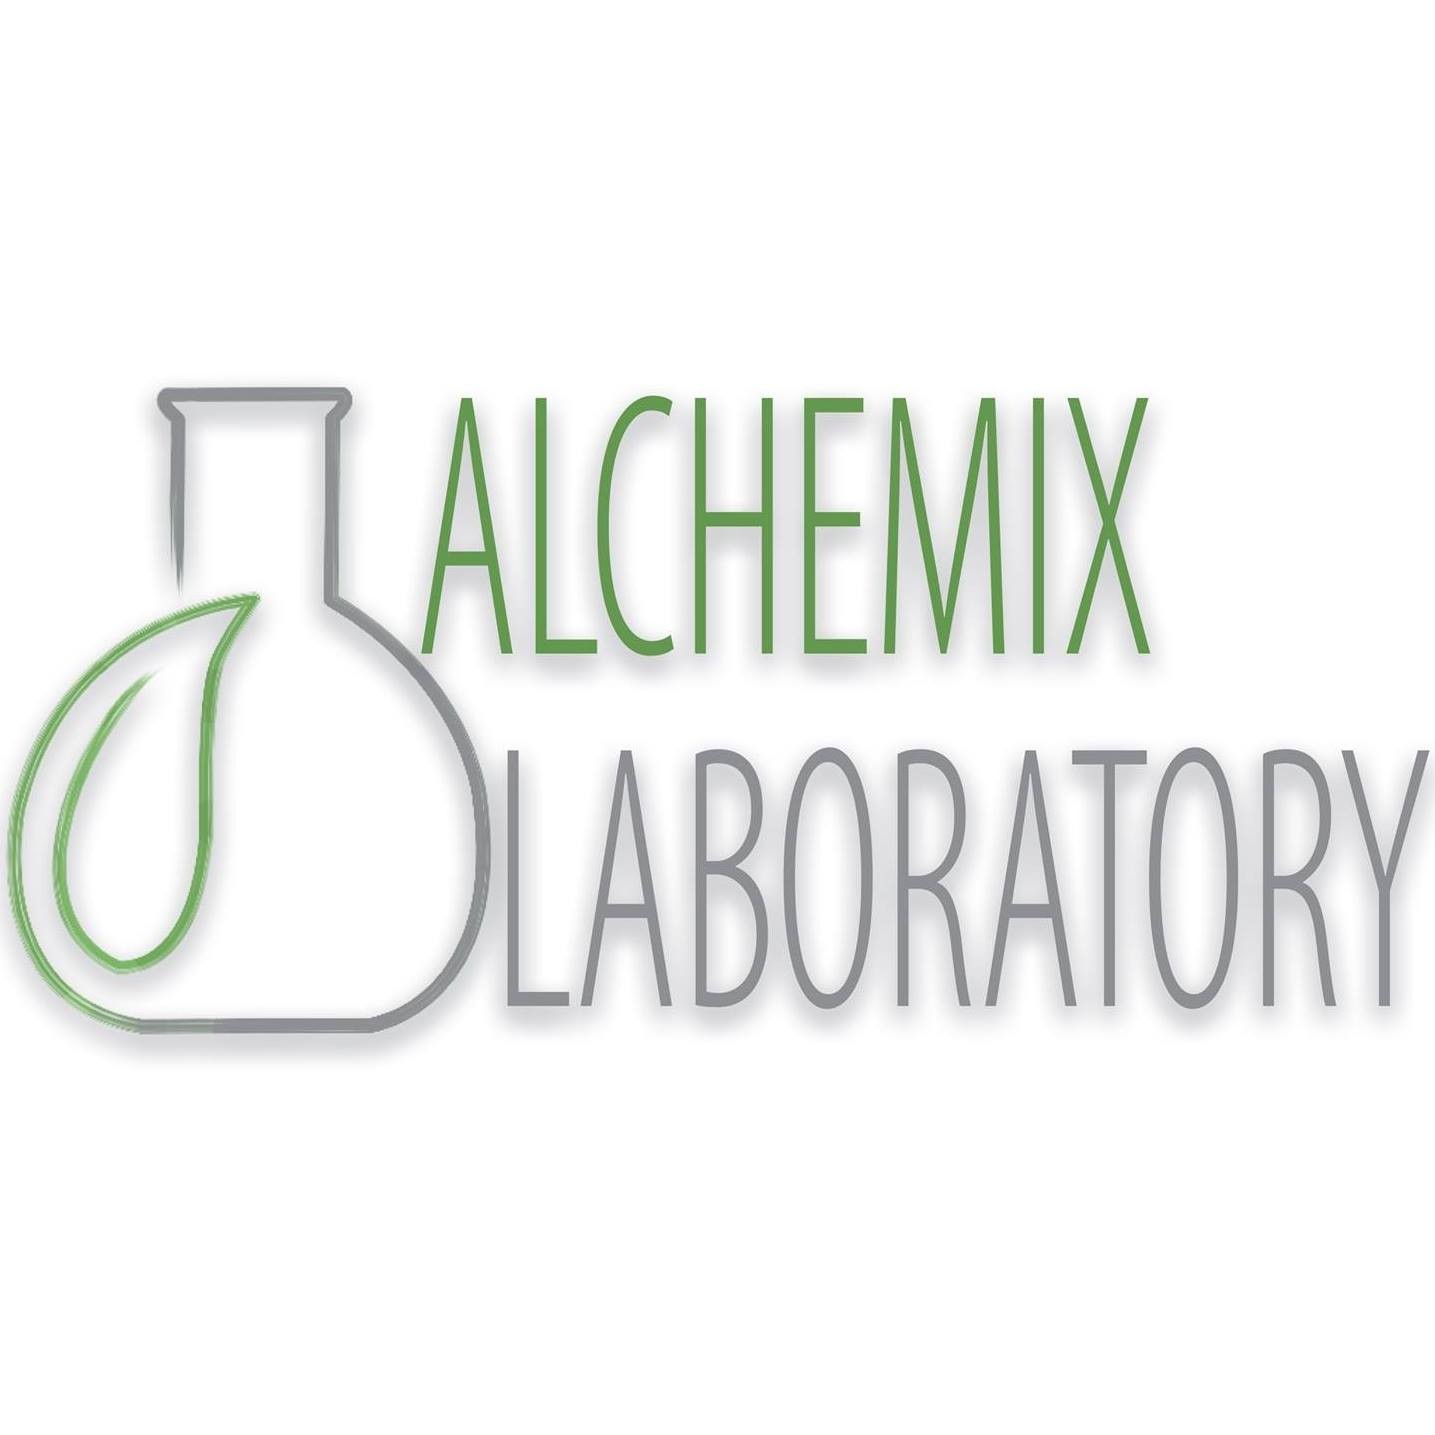 Eshop Alchemix laboratory